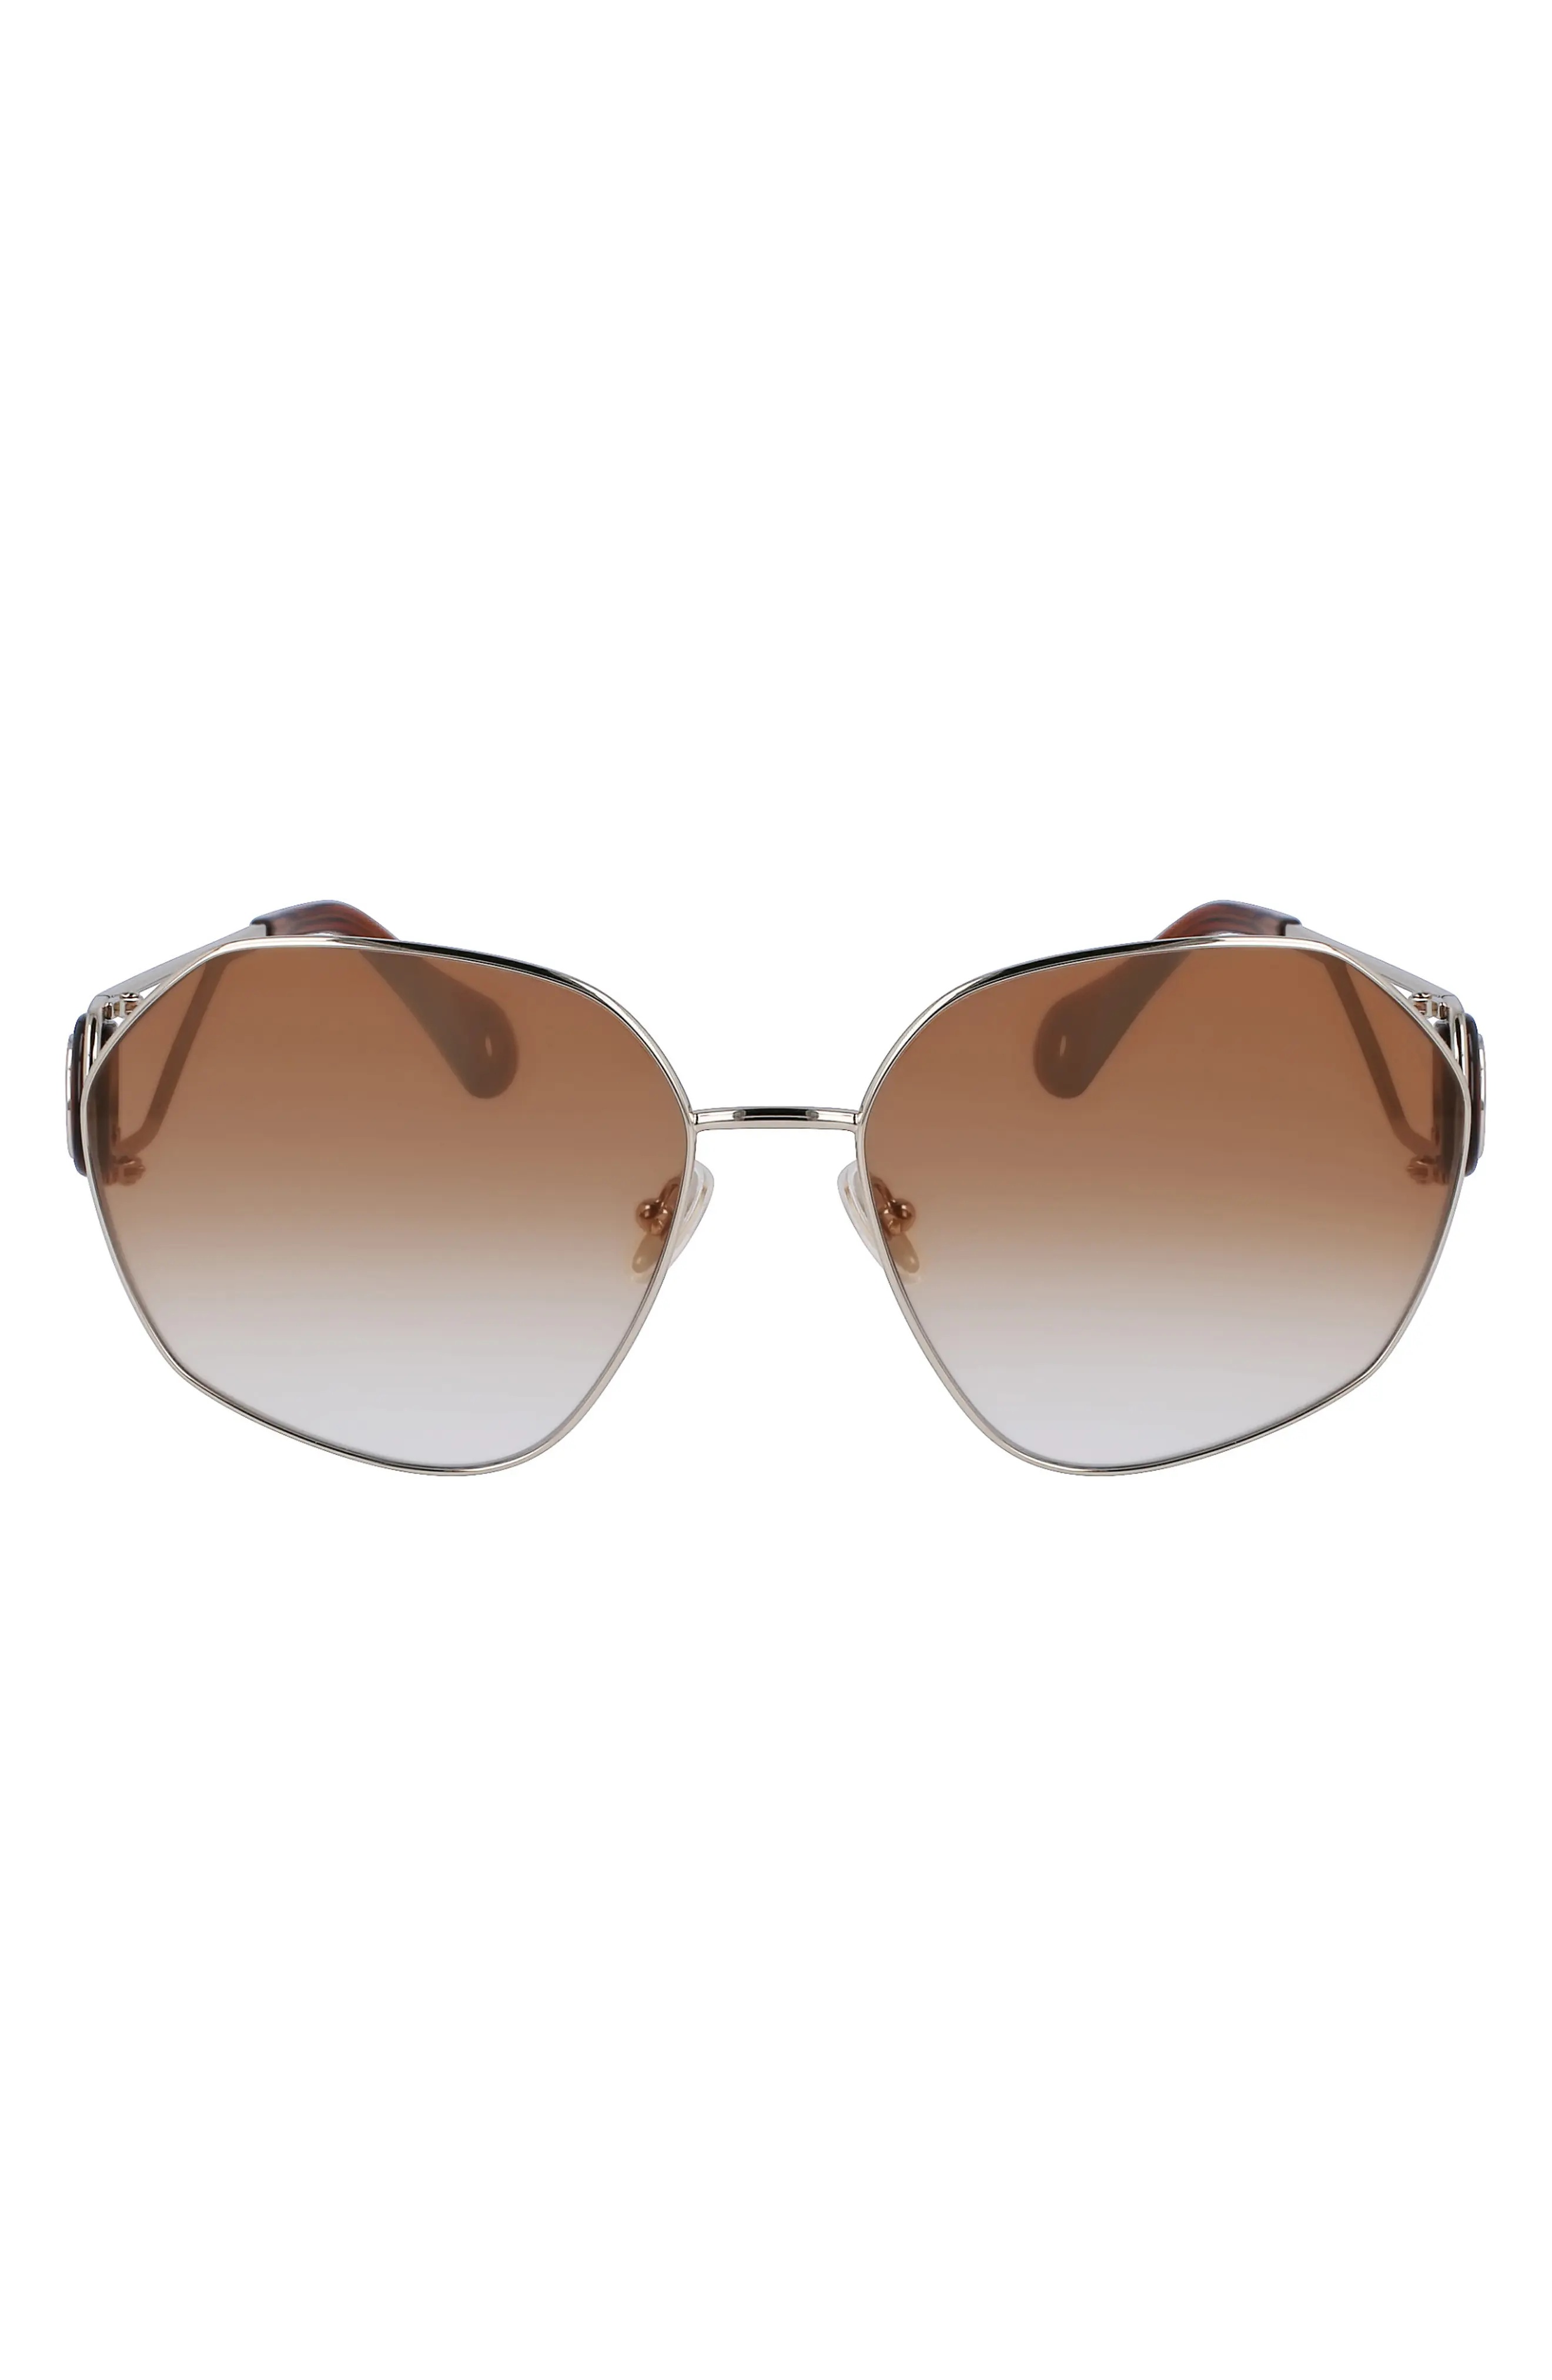 Mother & Child 62mm Oversize Rectangular Sunglasses in Gold/Gradient Caramel - 1